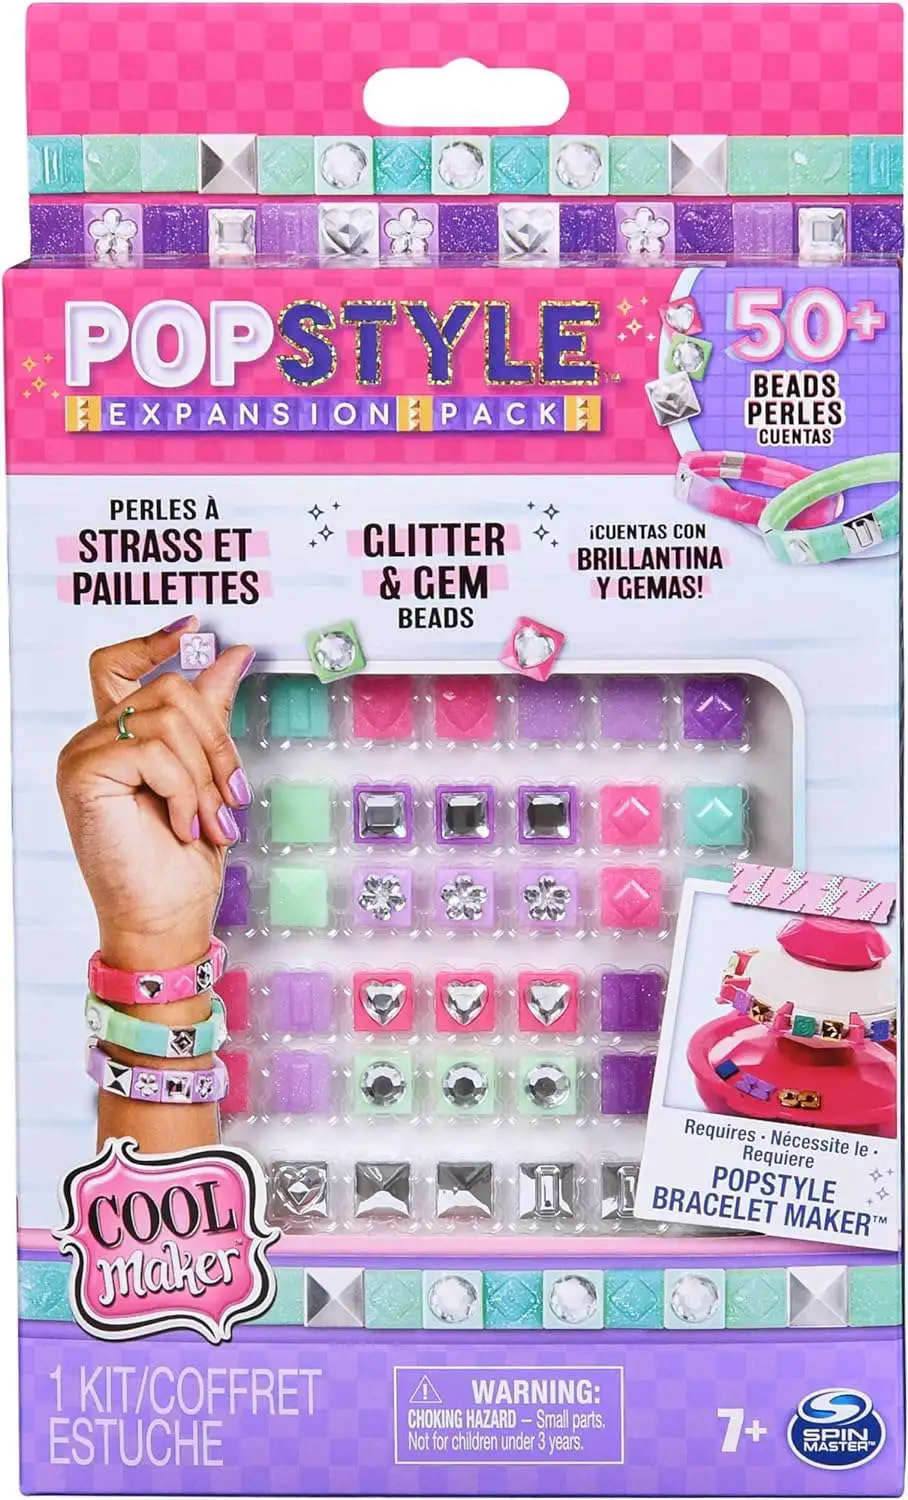 Spin Master Toy Cool Maker PopStyle Create and Remake BraceletMaker